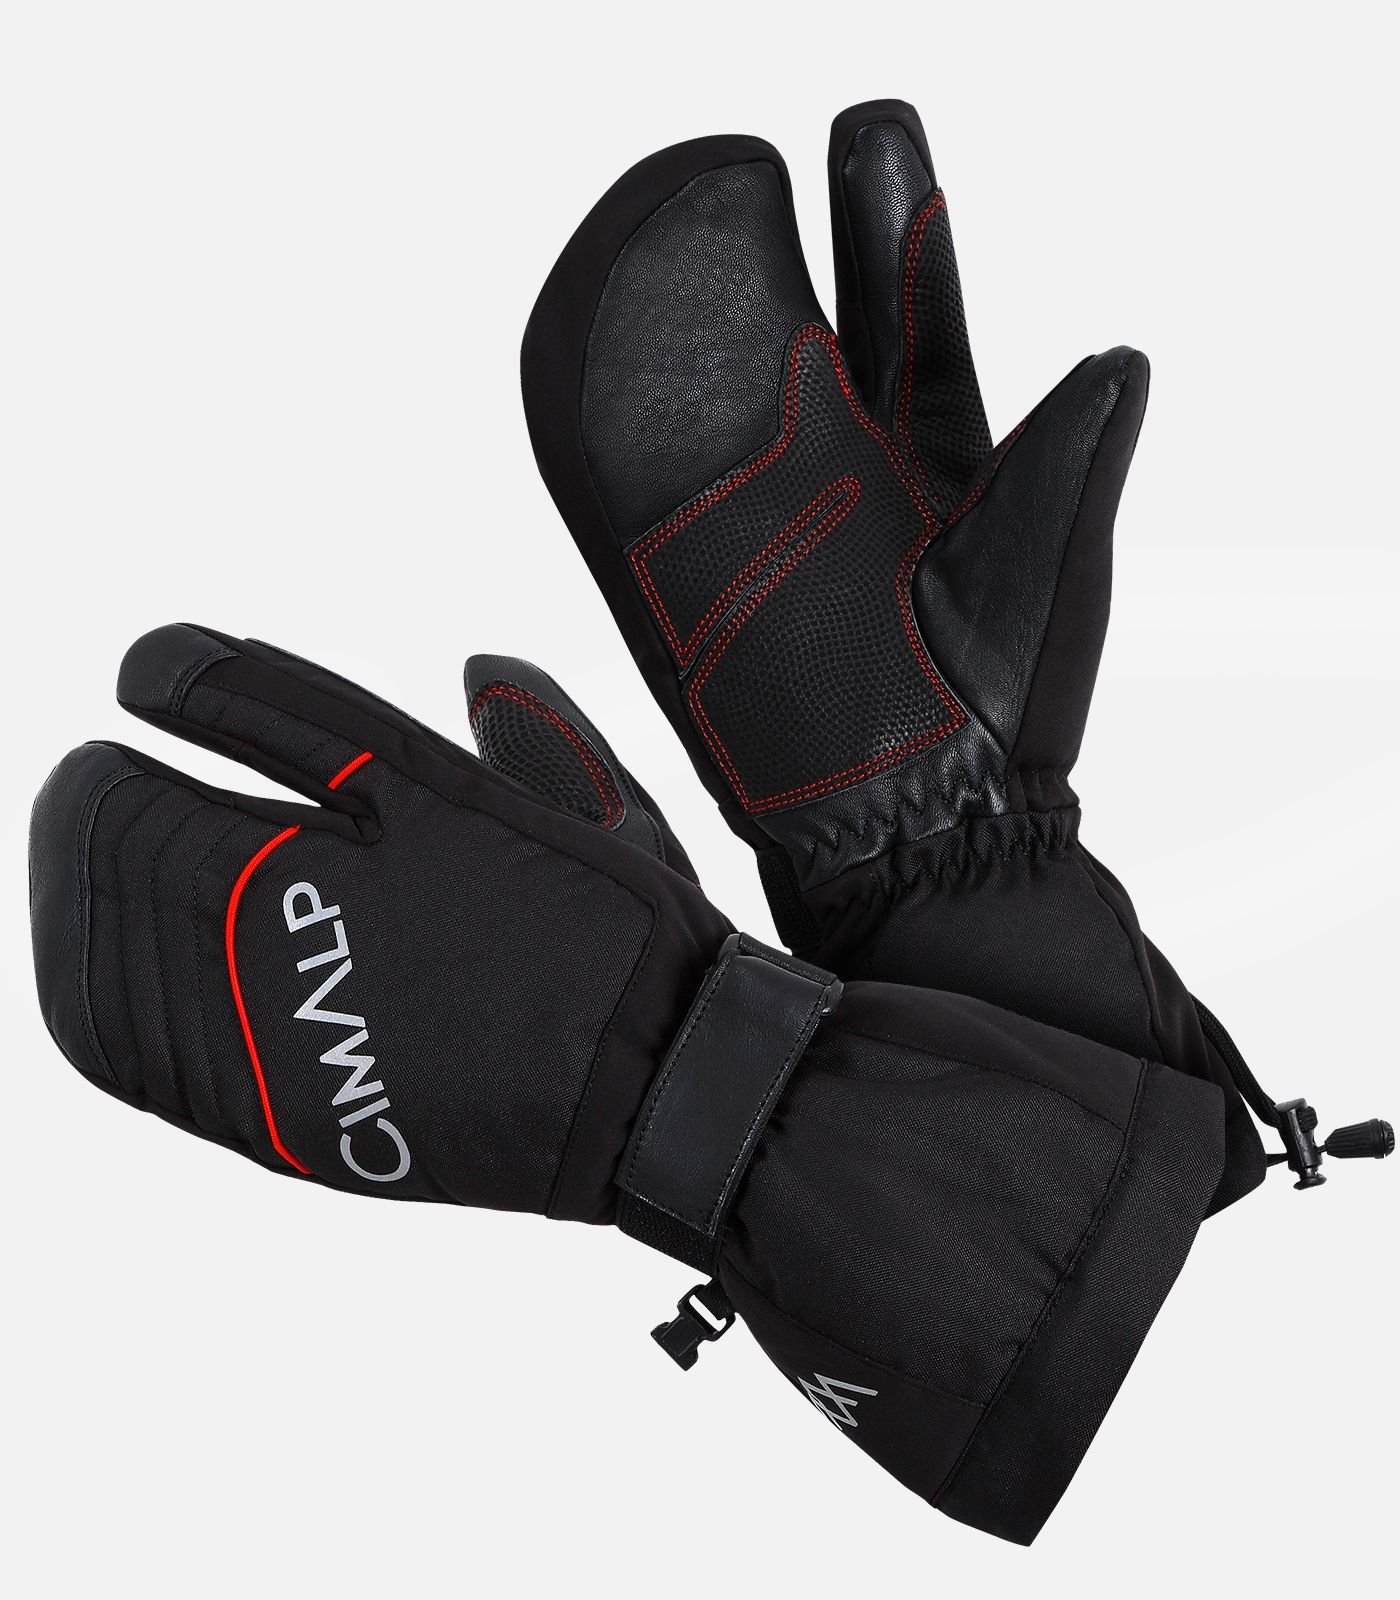 Warme 3-Finger-Handschuhe | CIMALP®